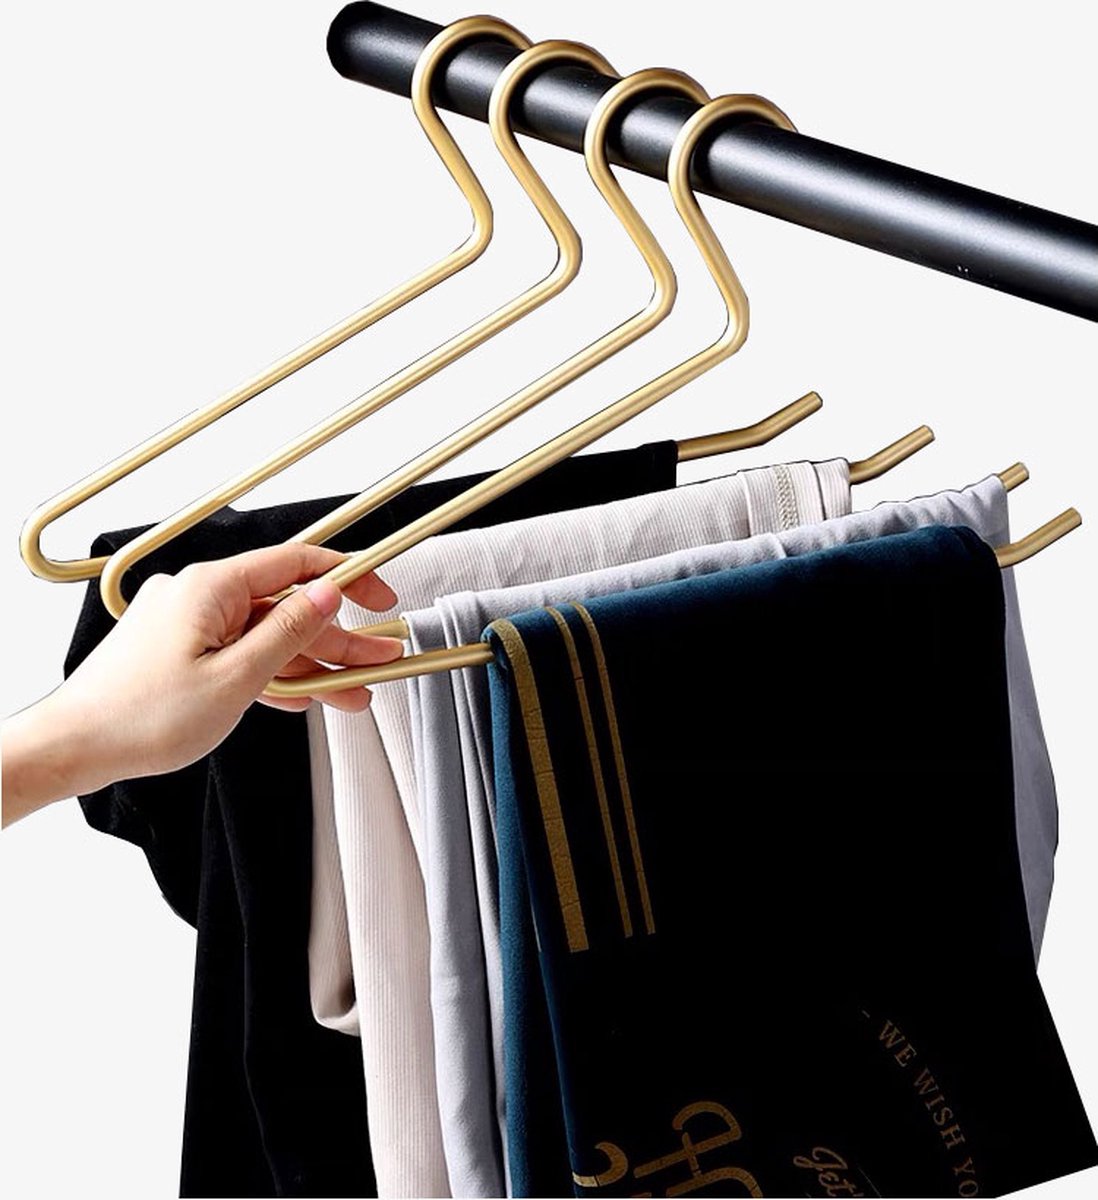 Broekhanger Maaike | Kledinghangers | Kleerhangers | Metalen Hangers | Kleding | Kapstok | Goud | Strak Design | Set van 5 luxe kledinghangers